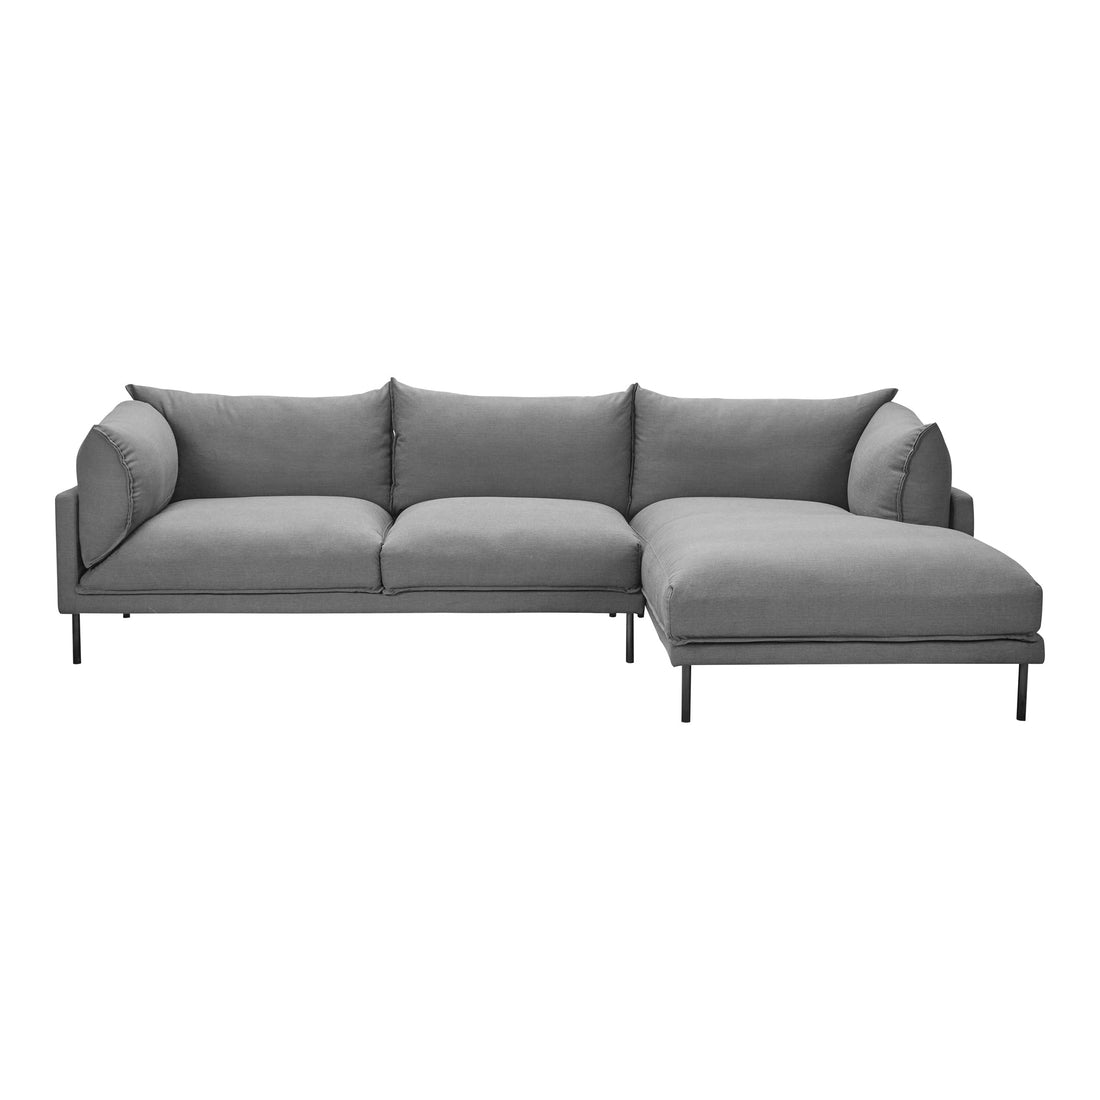 Sofa Blue: Timeless Comfort in Azure